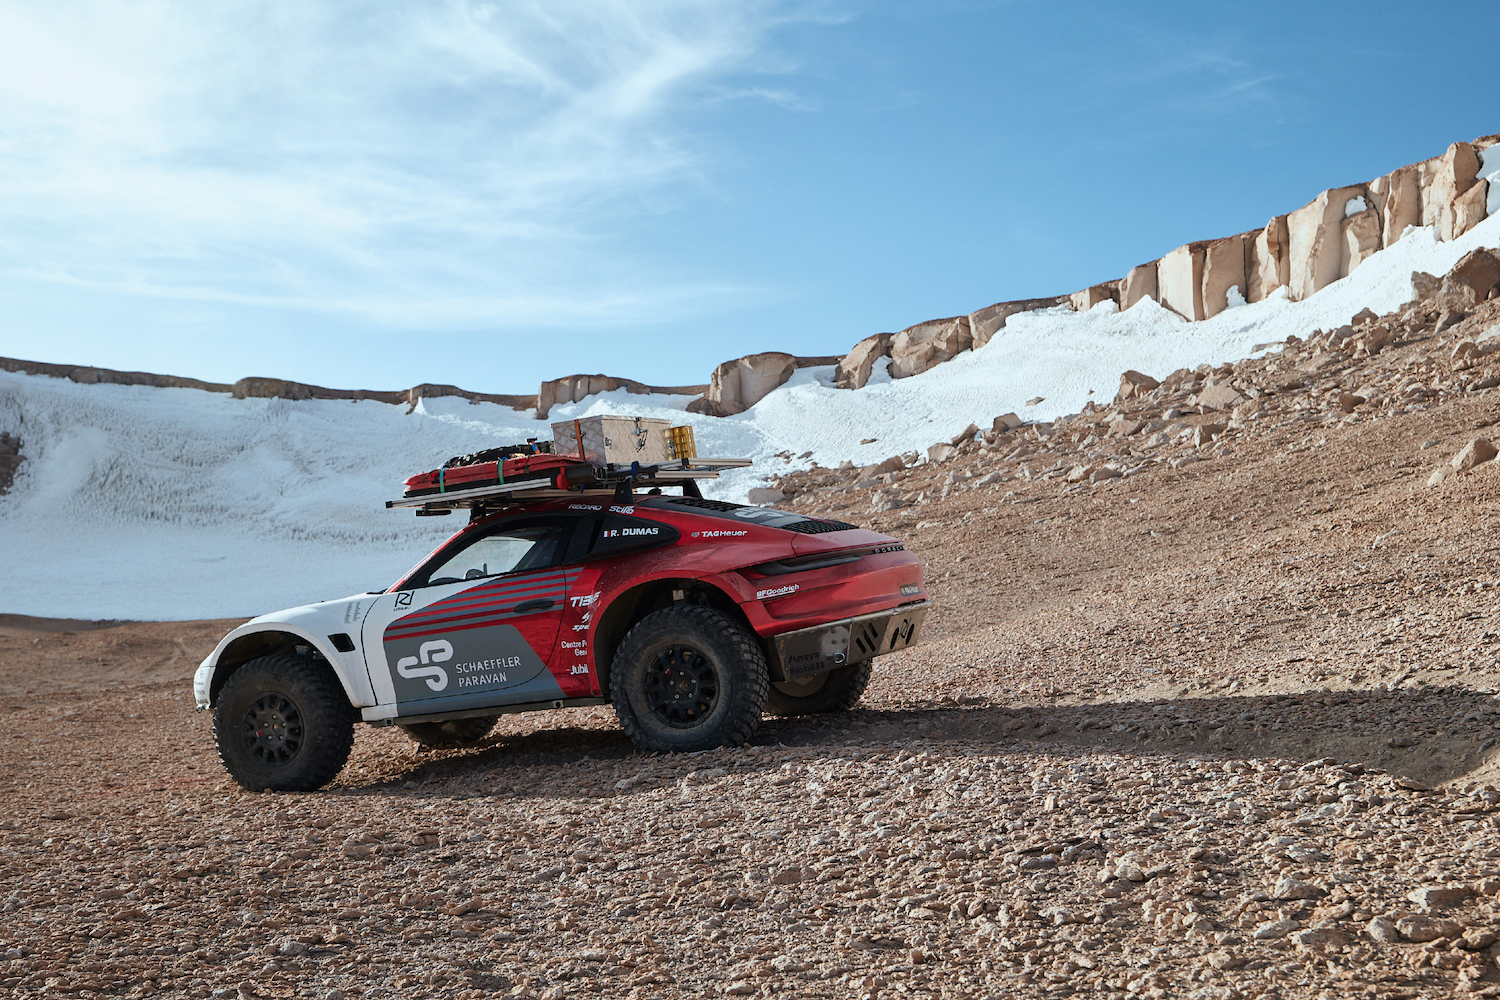 Porsche 911 Dakar Prototype going down a rocky mountain with snow in the back.